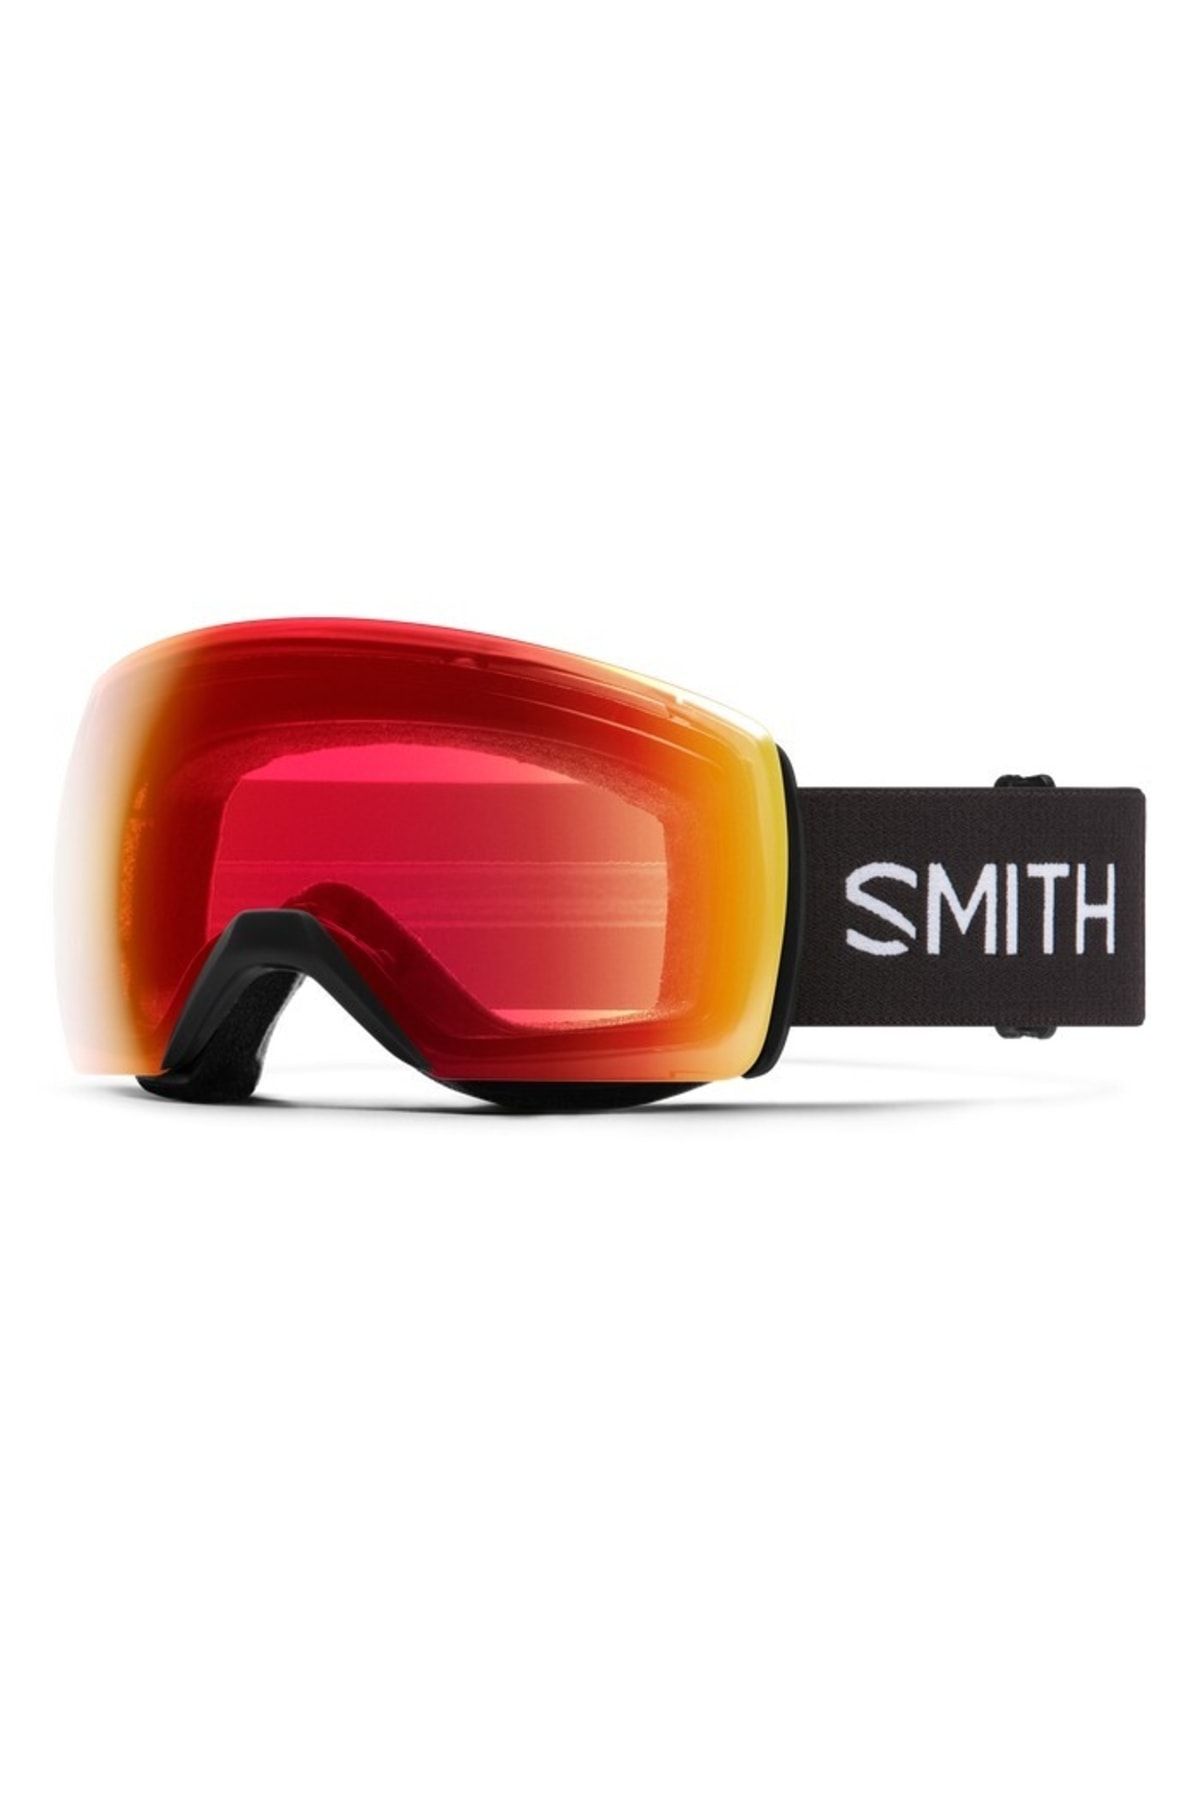 Smith Optics Skylıne Xl Goggle